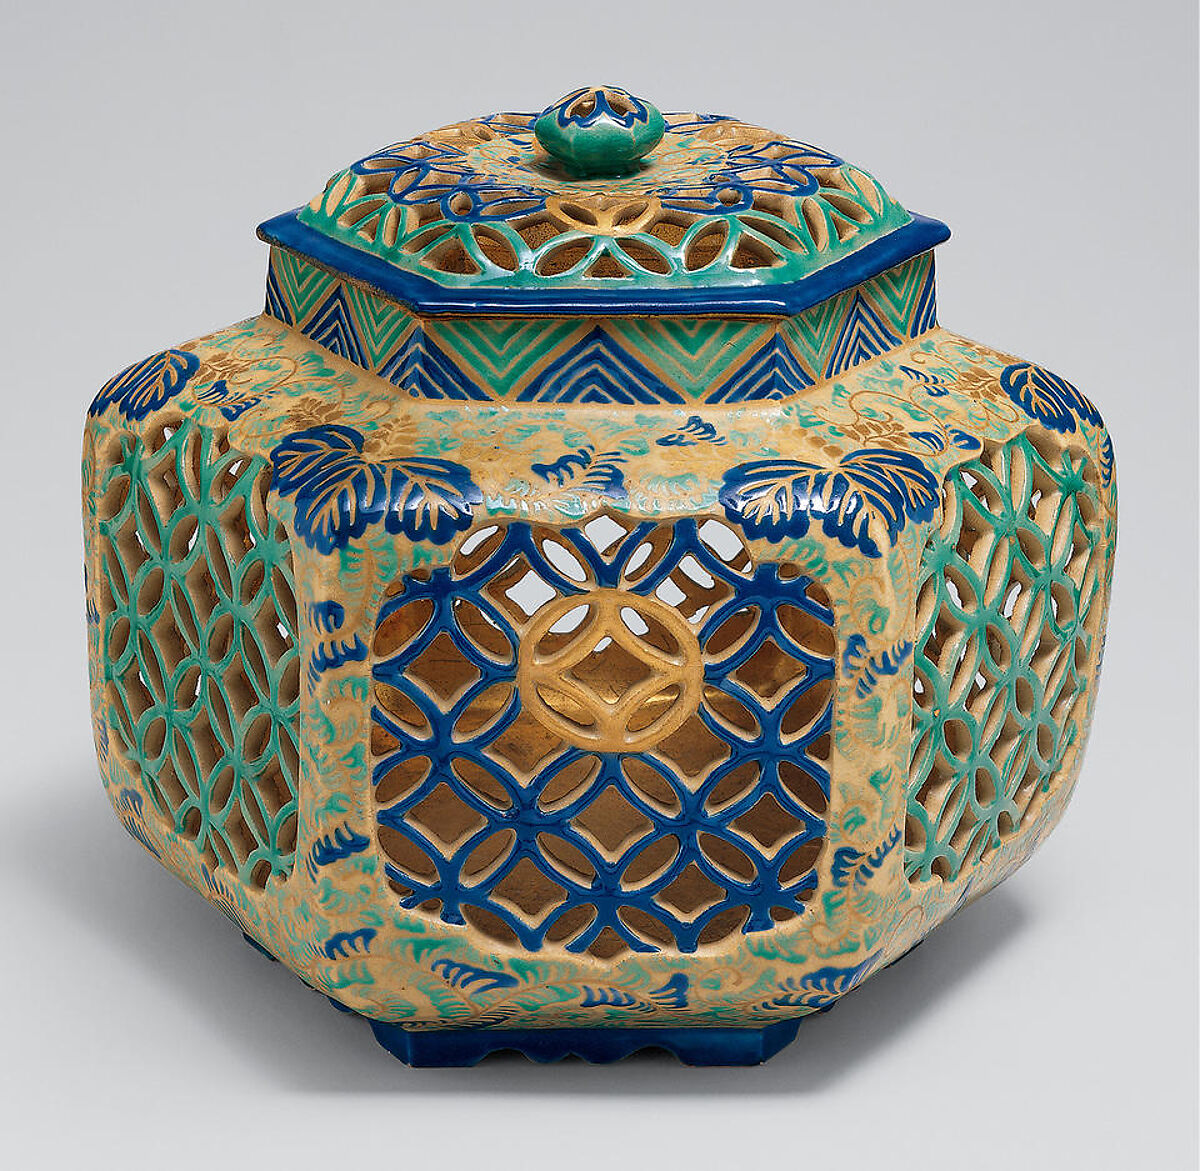 Hexagonal Jar (Rokkaku-tsubo) with Paulownia and Geometric Design, Stoneware with polychrome overglaze enamels and gold (Ko-Kiyomizu ware), Japan